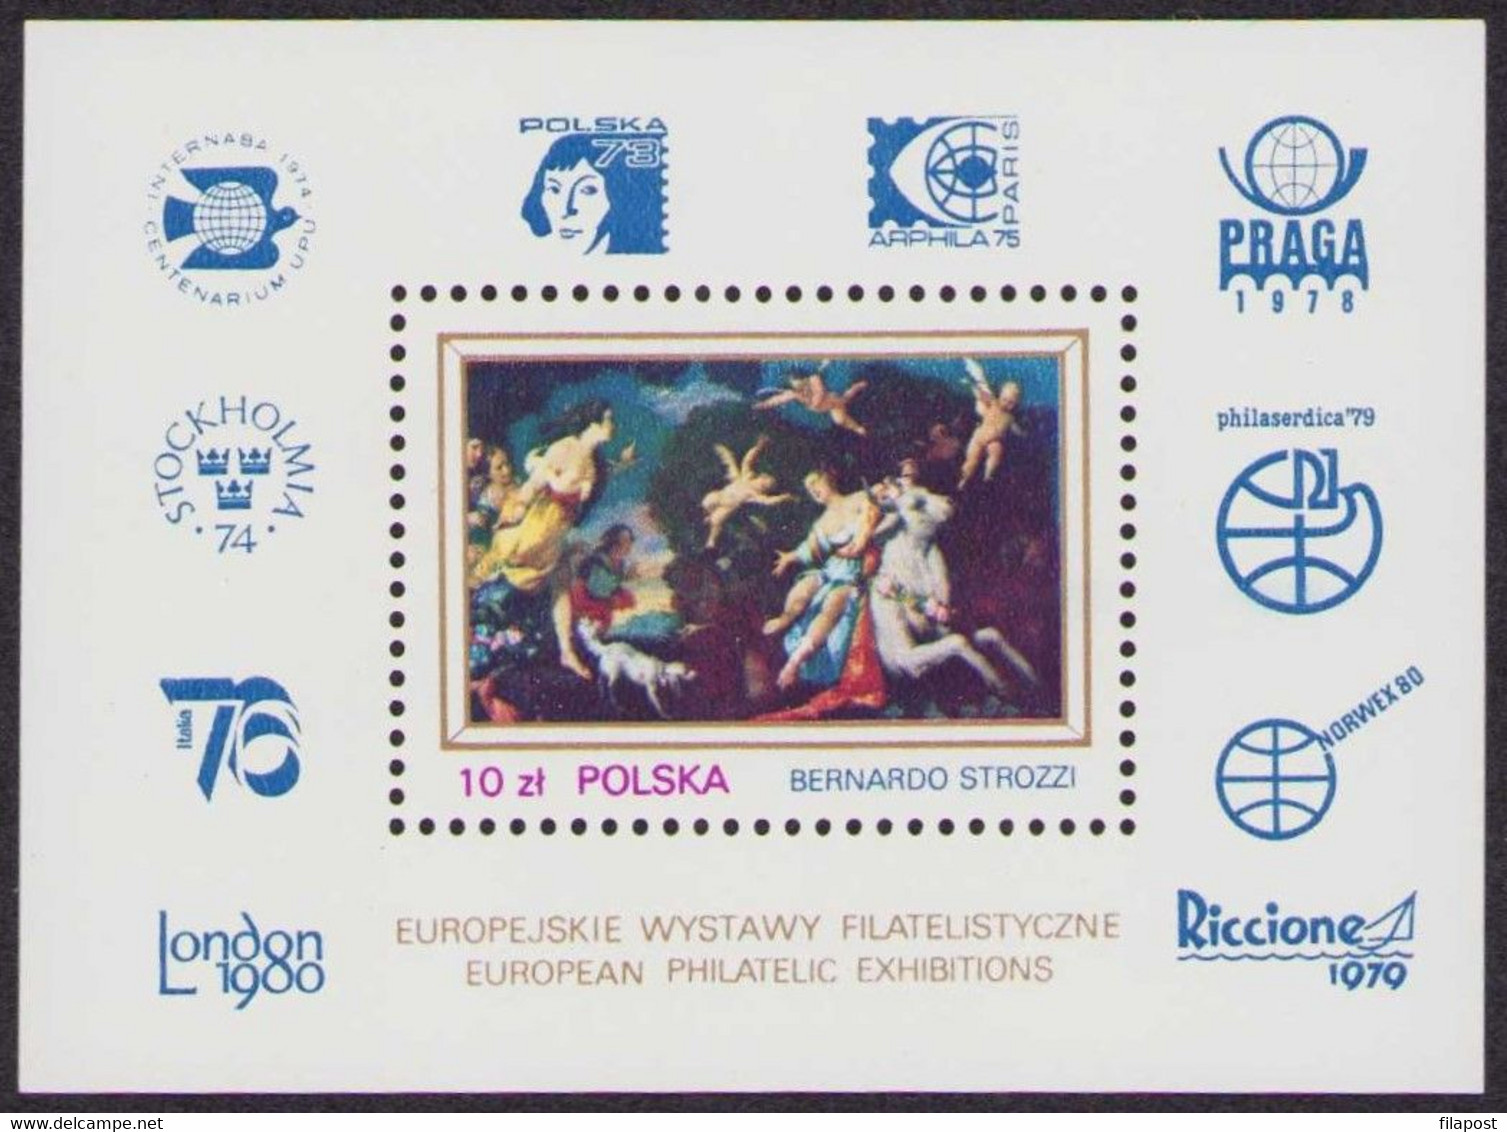 POLAND 1979 Full year / Tadeusz Kosciuszko, space, sailing, horseriding, horses, Pope John Paul II MNH**